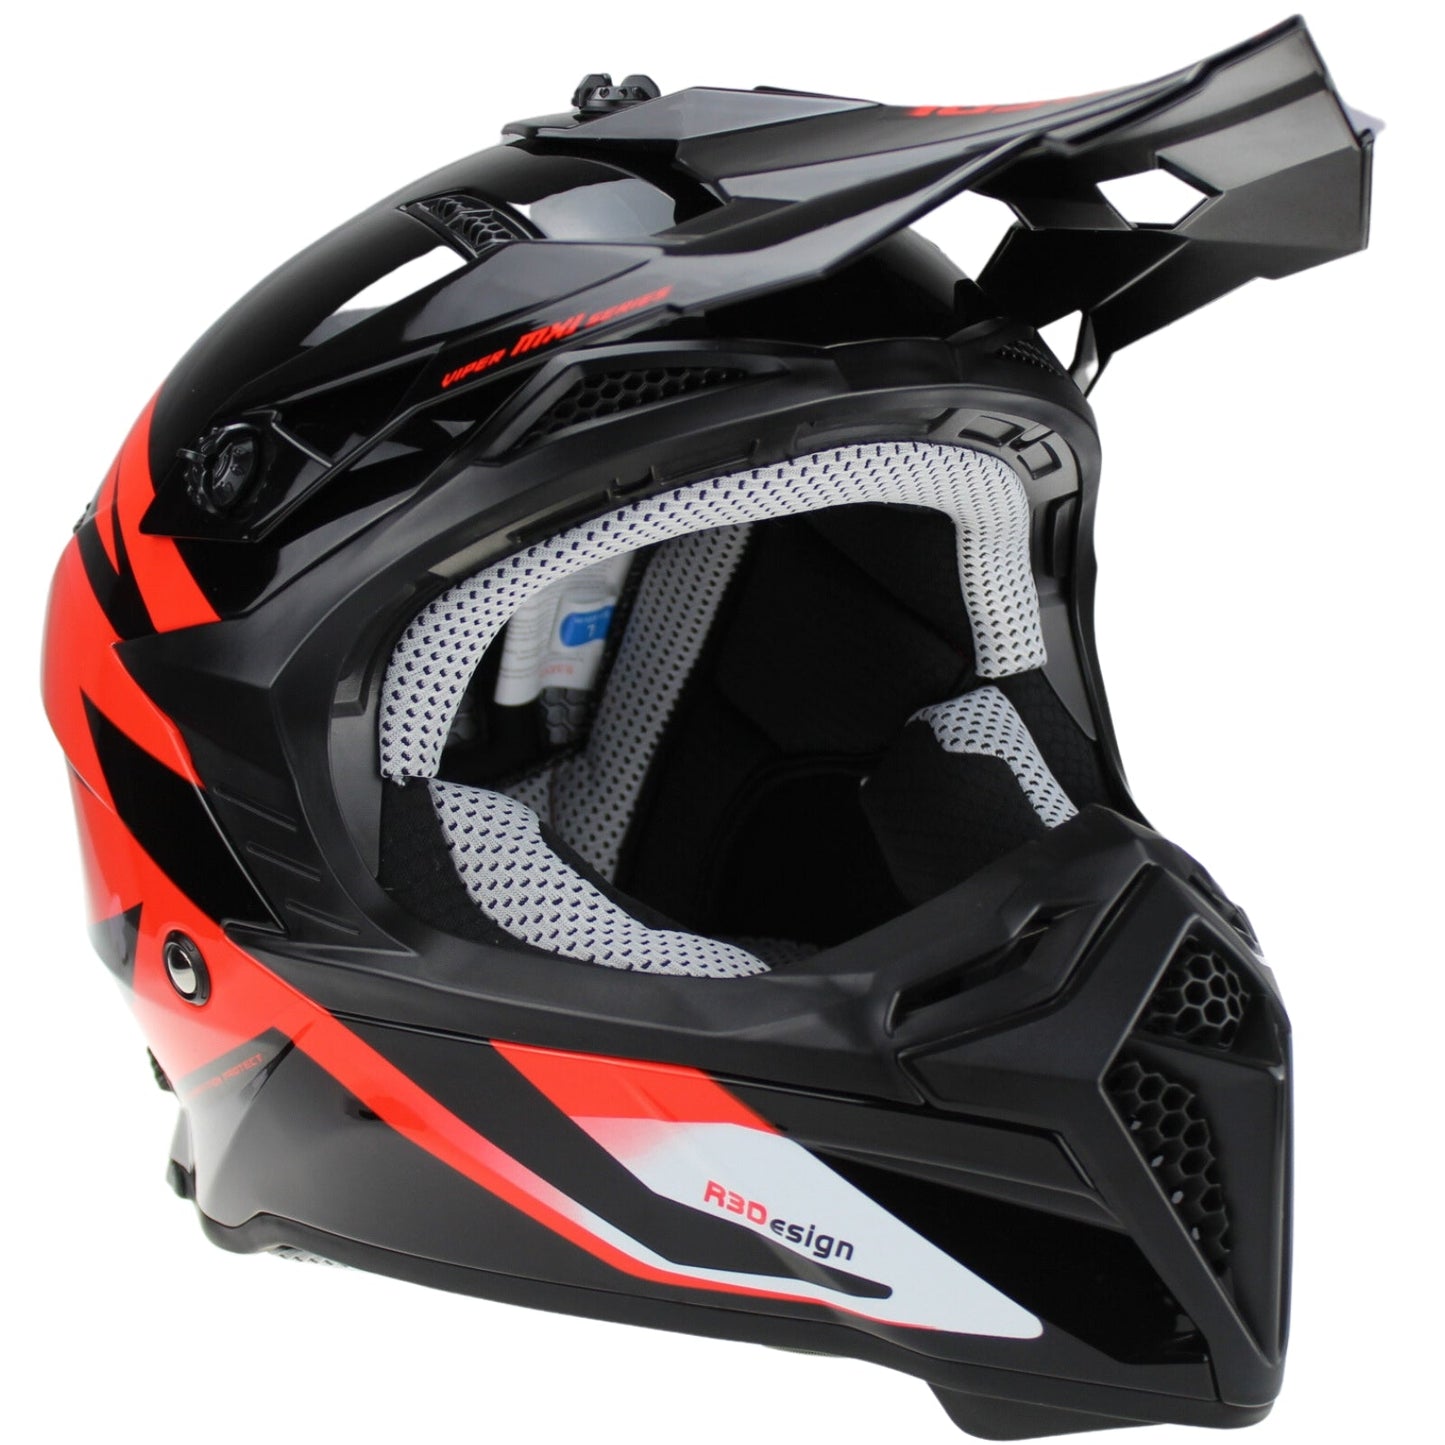 Viper Rsx221 Mx Motorbike Helmet Black Red